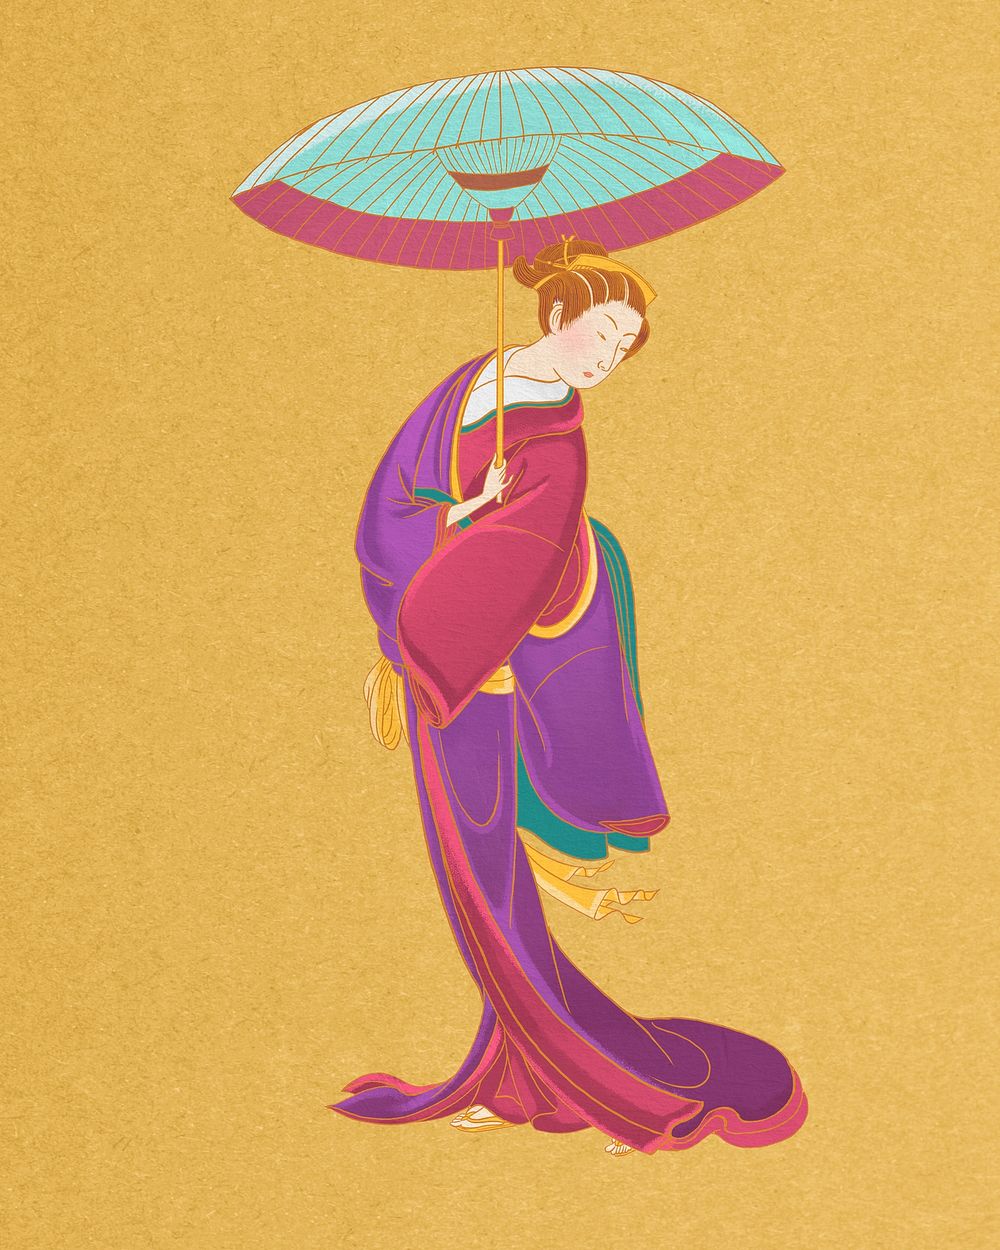 Vintage Japanese woman, holding umbrella character psd